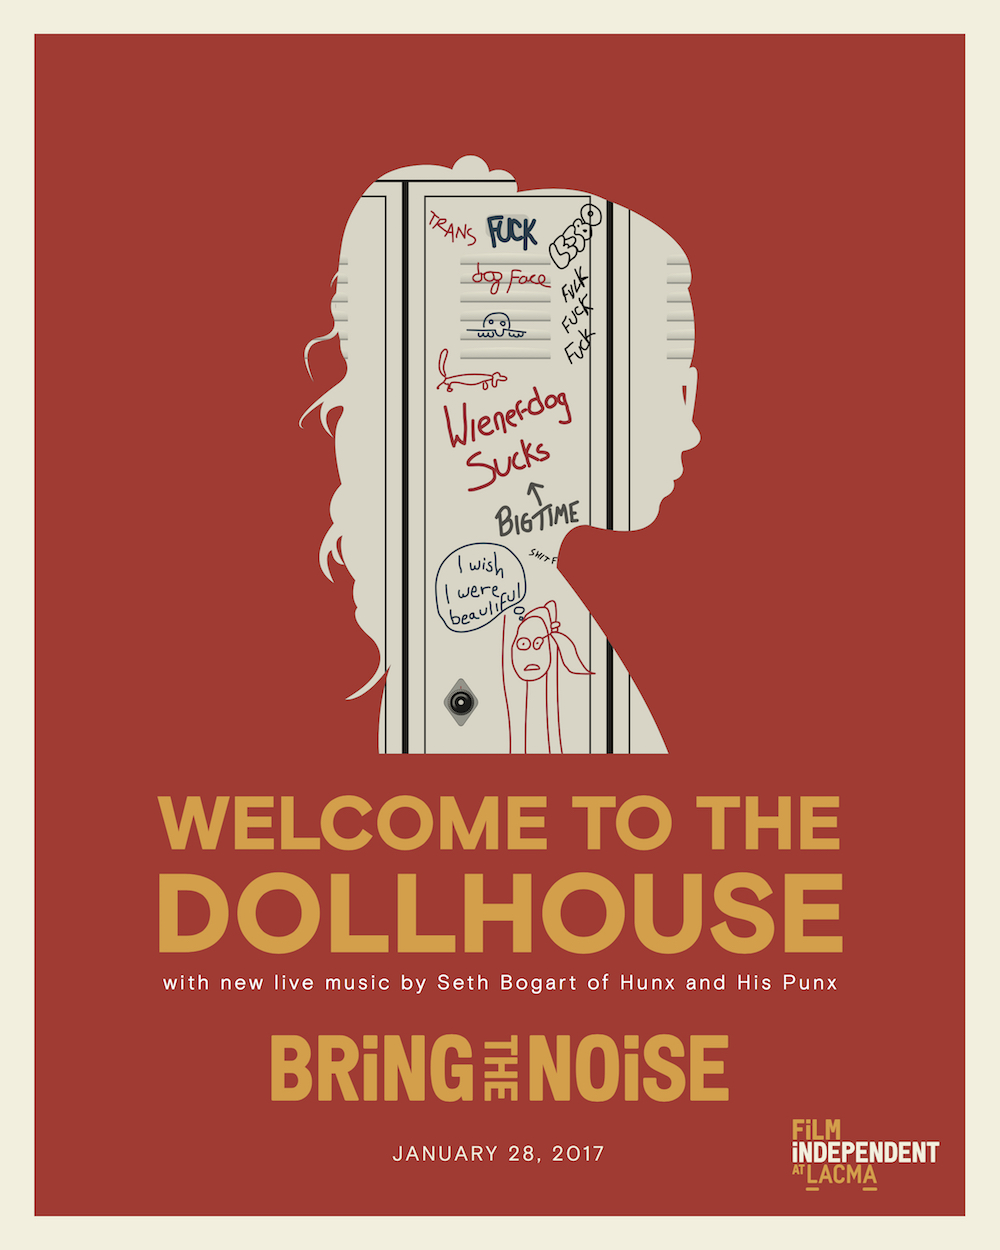 Bring-The-Noise-Welcome-to-the-Dollhouse-POSTER5b15d5b45d5b15d5b15d5b15d5b15d.jpg